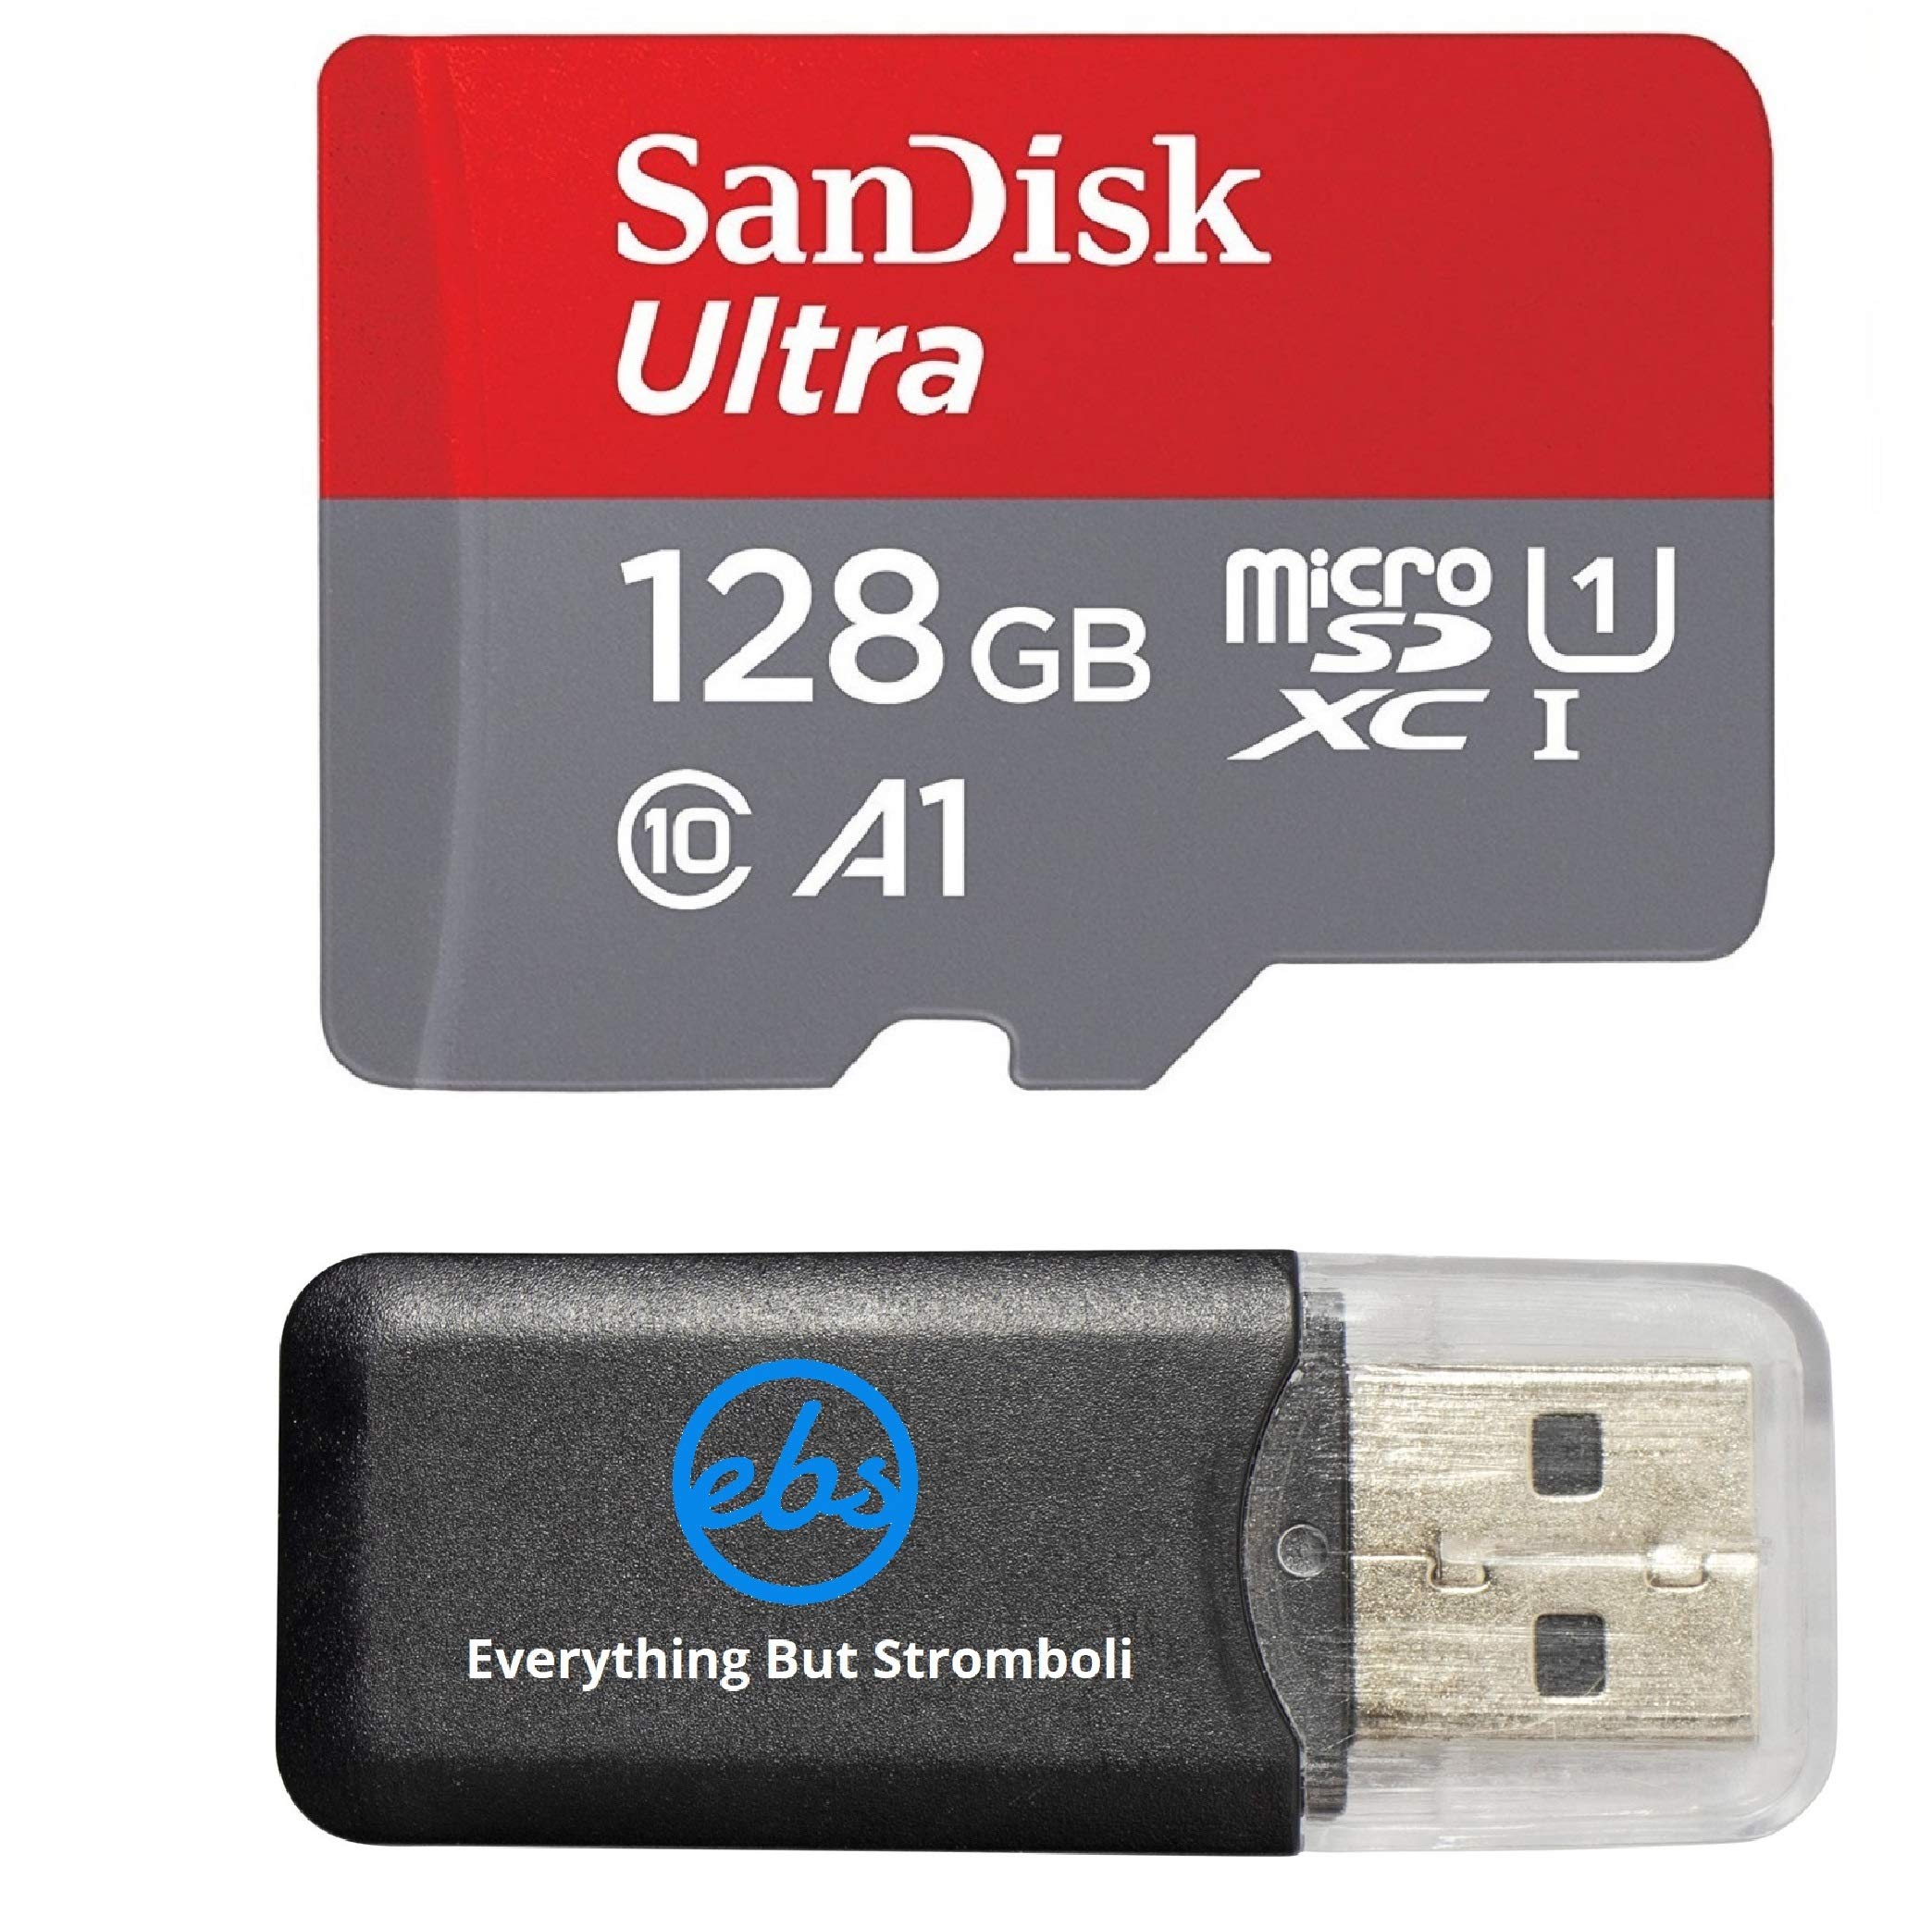 SanDisk 128GB Ultra UHS-I Class 10 100mbs MicroSDXC Memory Card works with LG V20 V30 Q6 Q8 G6 G6 X Venture K20 V Harmony S